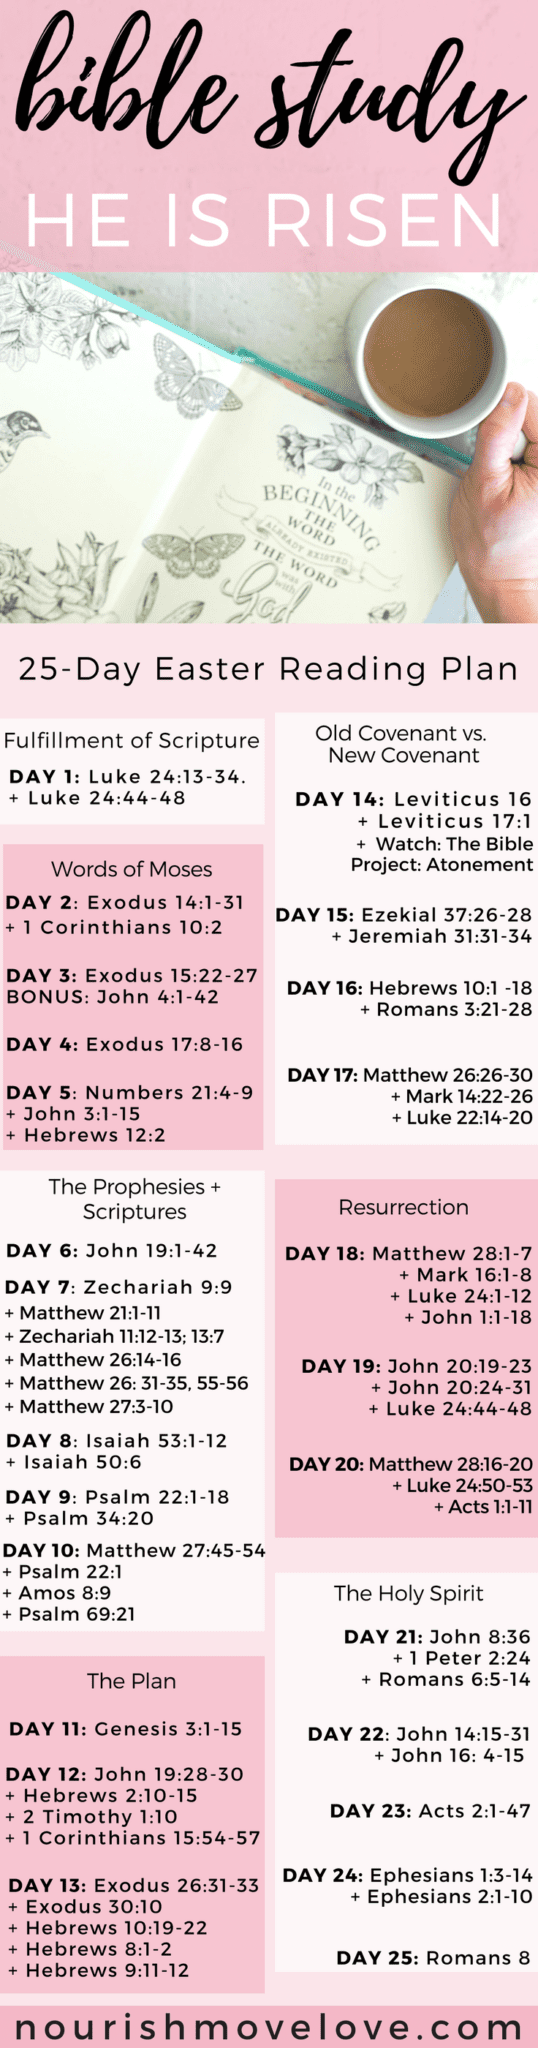 Easter Scripture Reading Challenge: 25-Day Bible Study | www.nourishmovelove.com